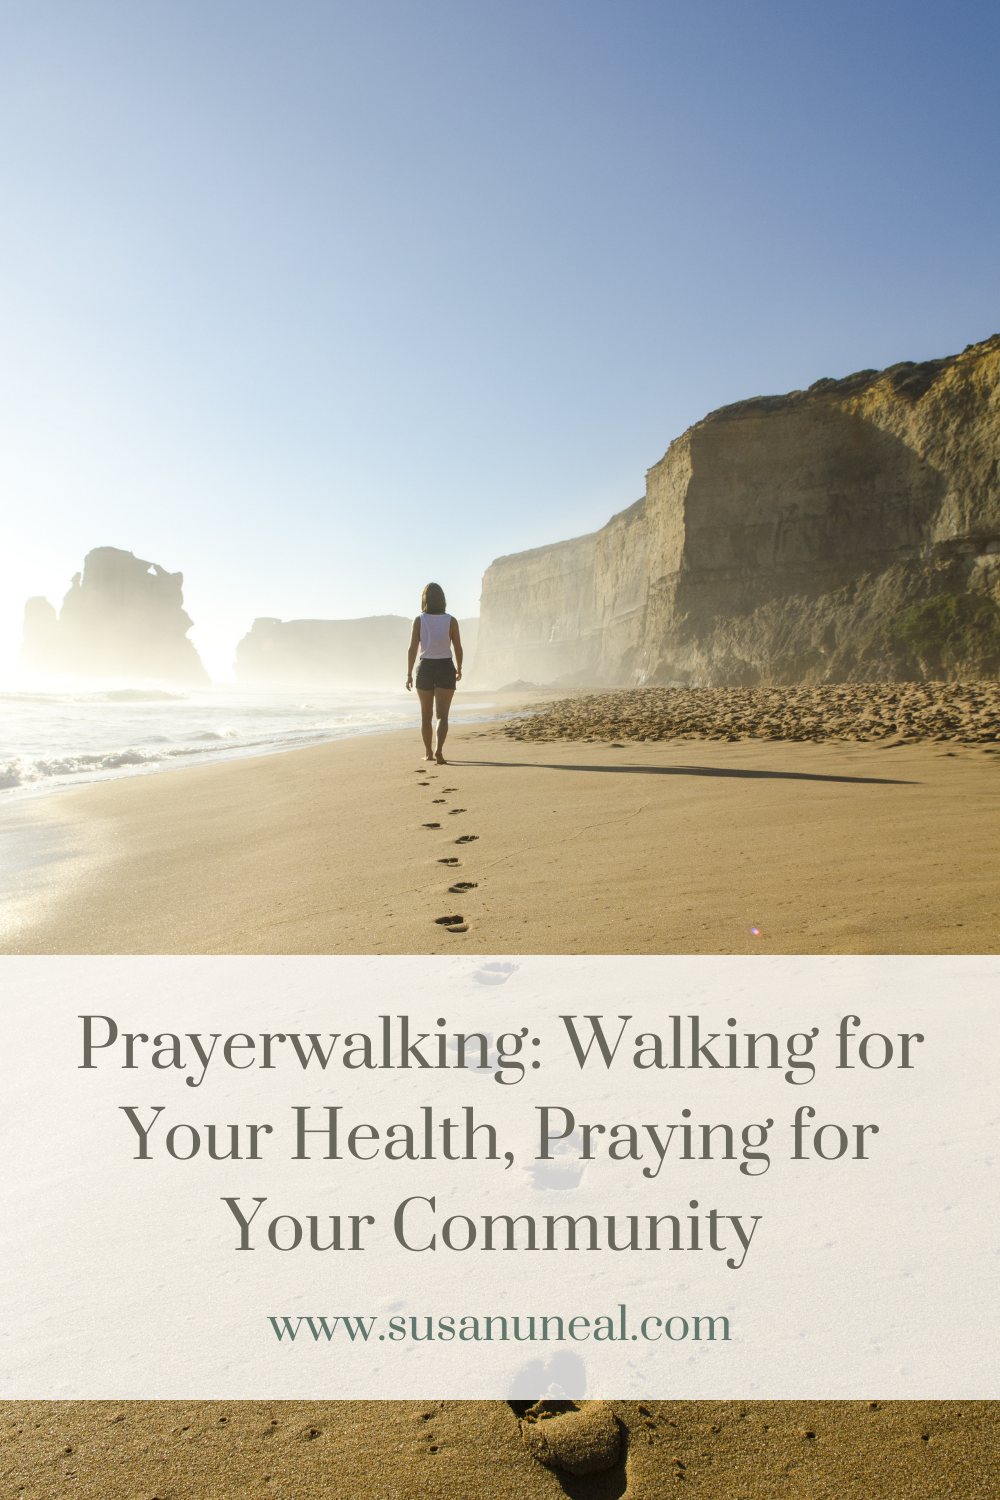 Prayerwalking: Walking for Your Health, Praying for Your Community